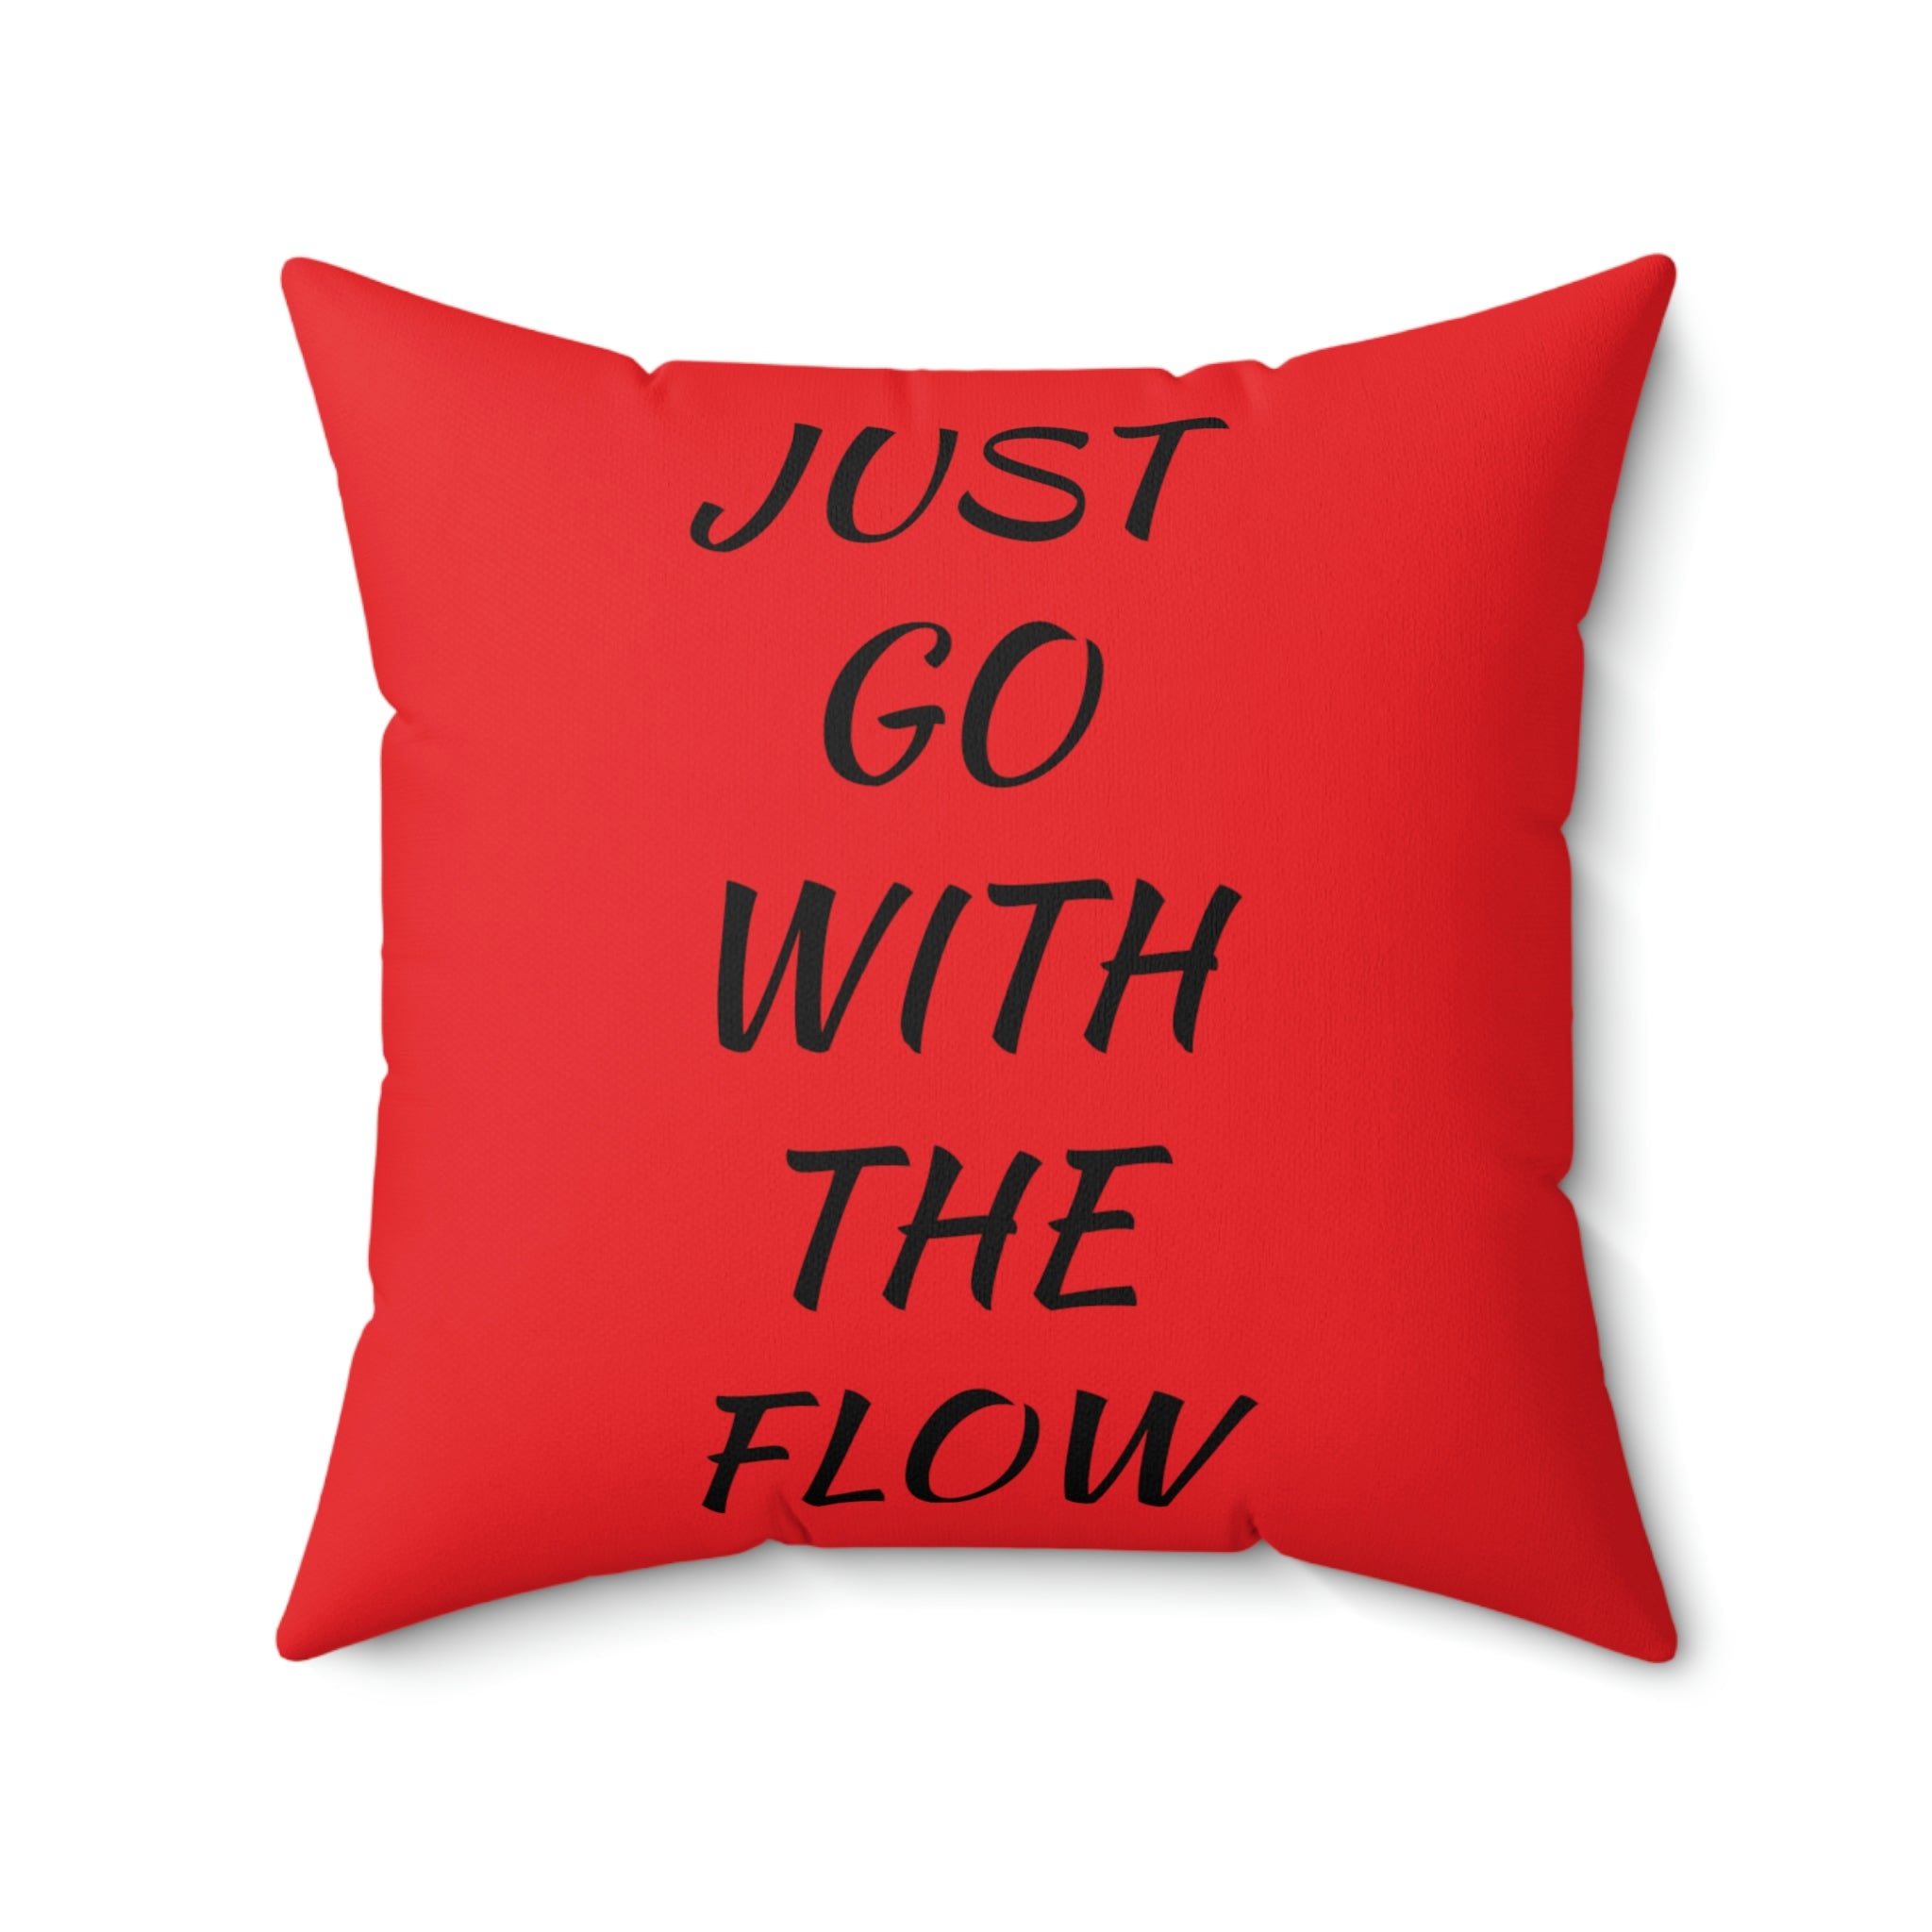 JustGWTF/Spun Polyester Square Pillow